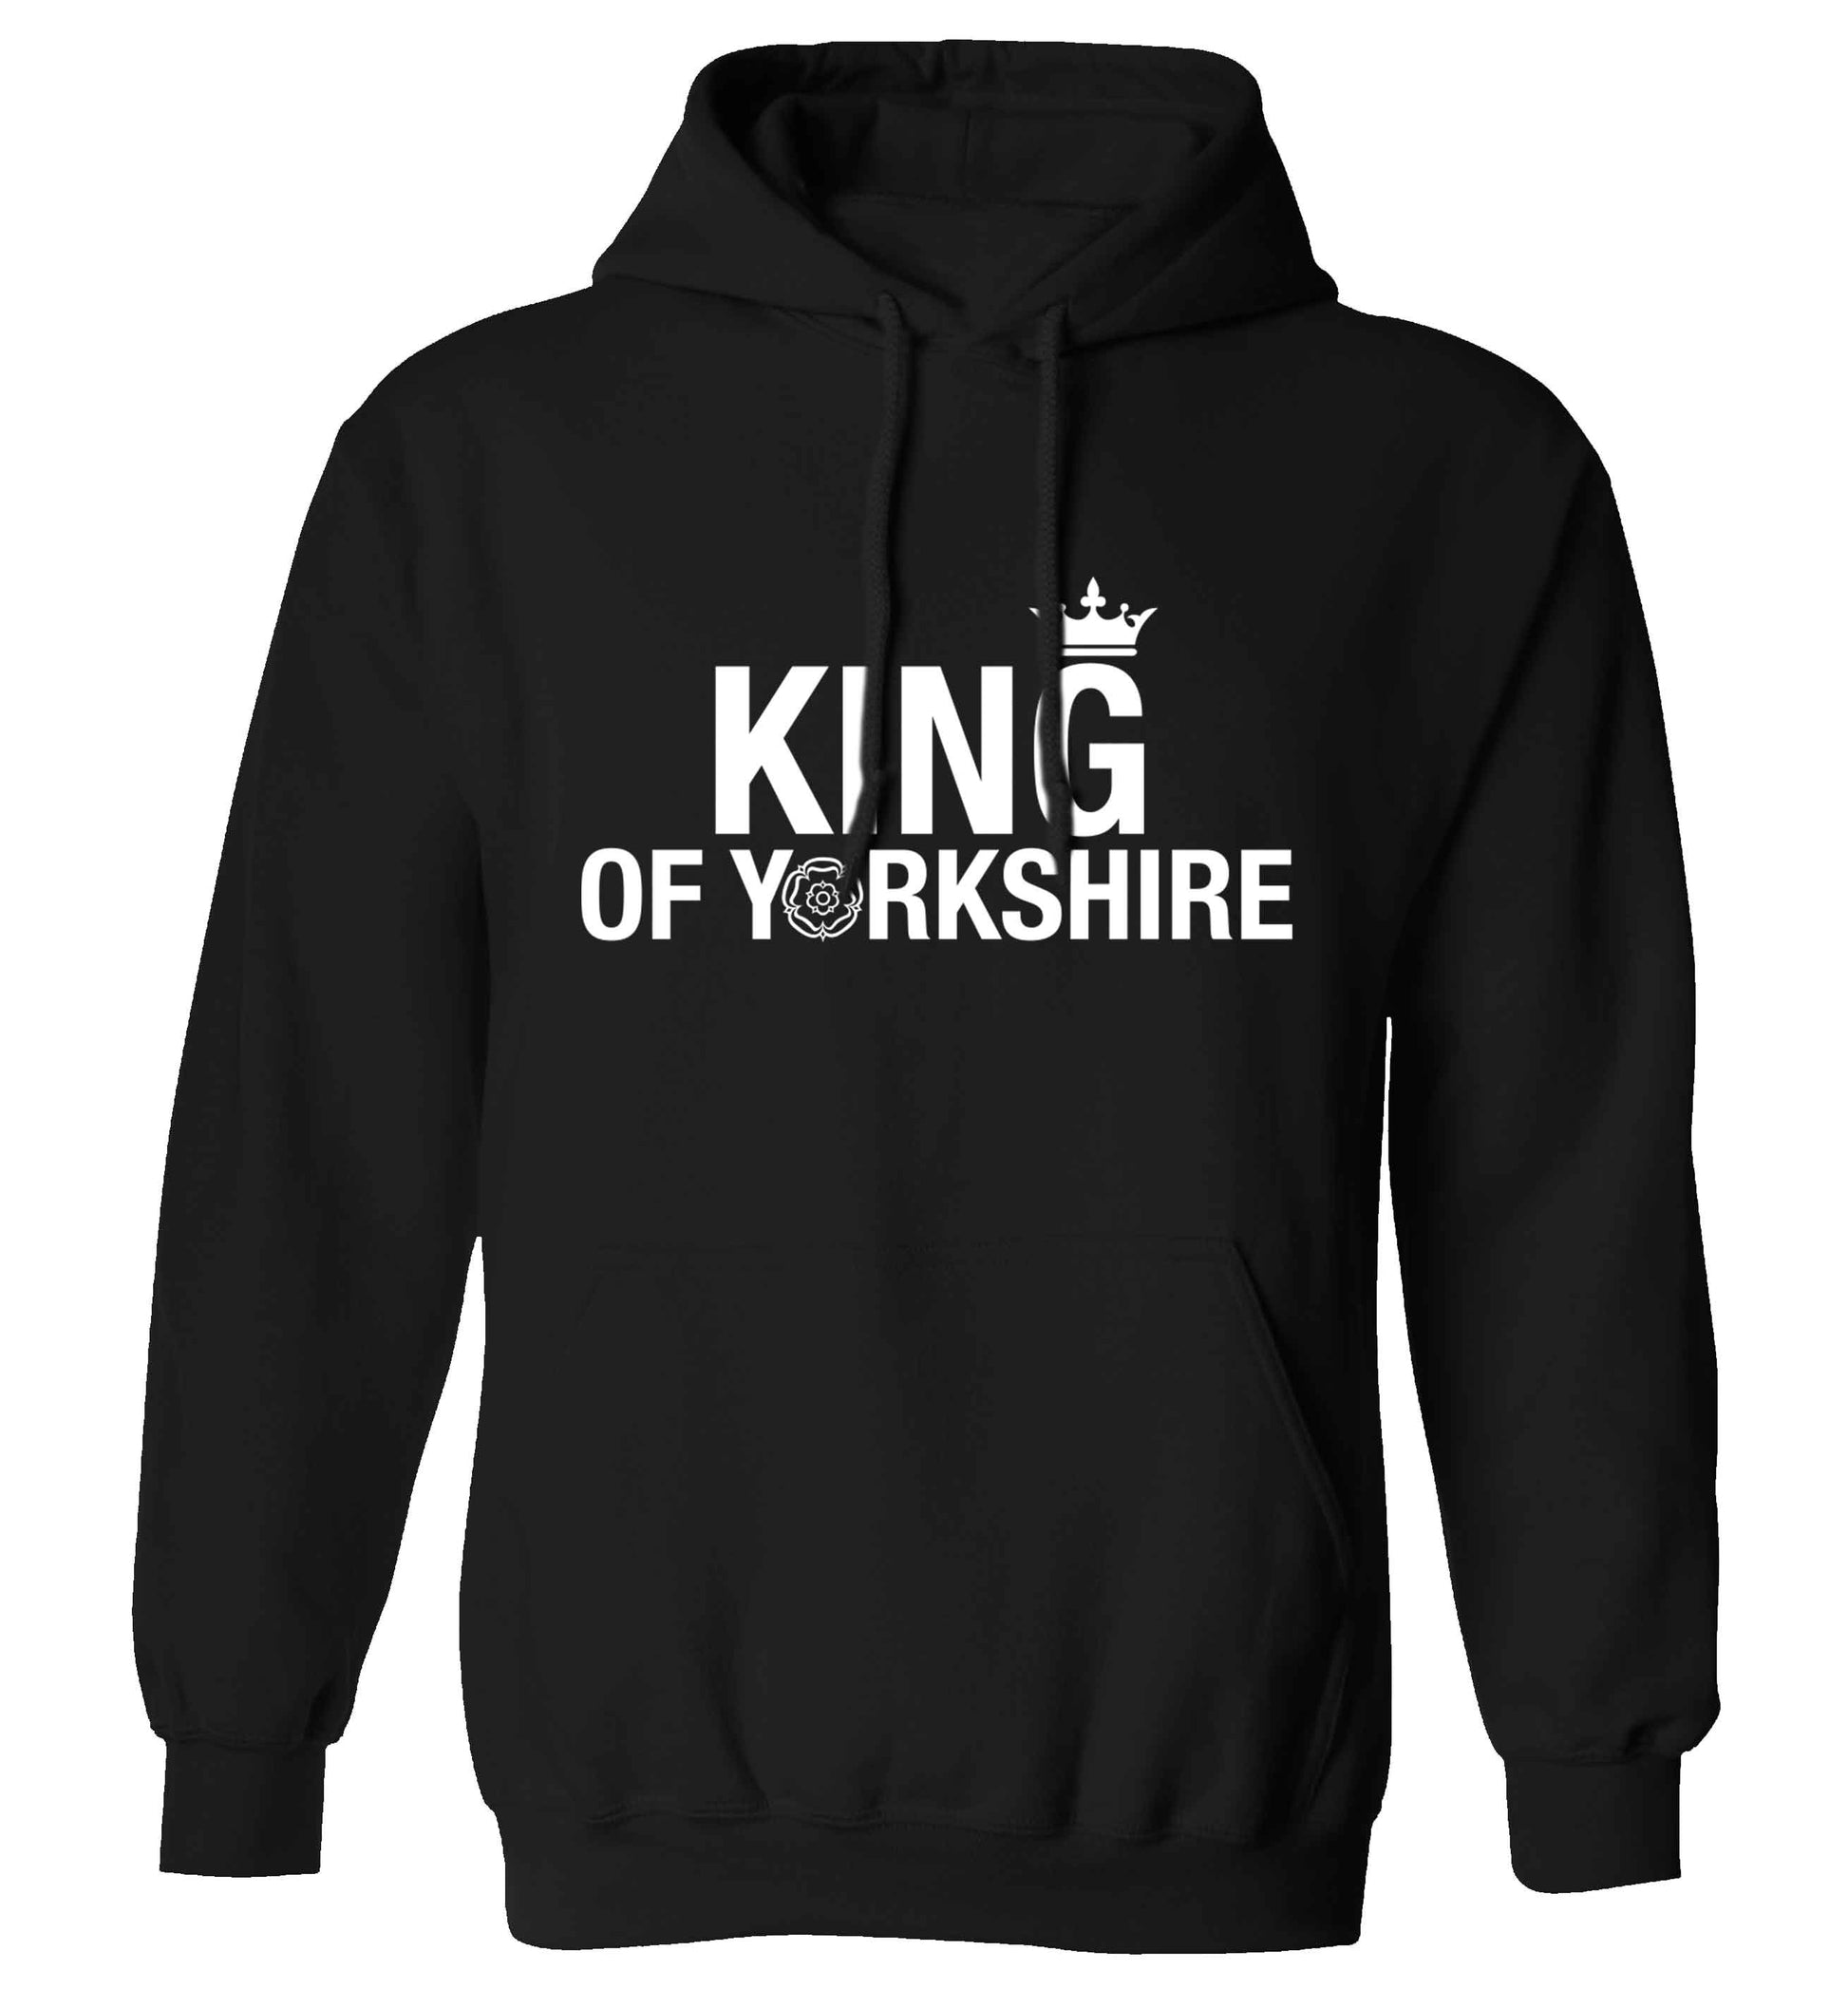 King of Yorkshire adults unisex black hoodie 2XL